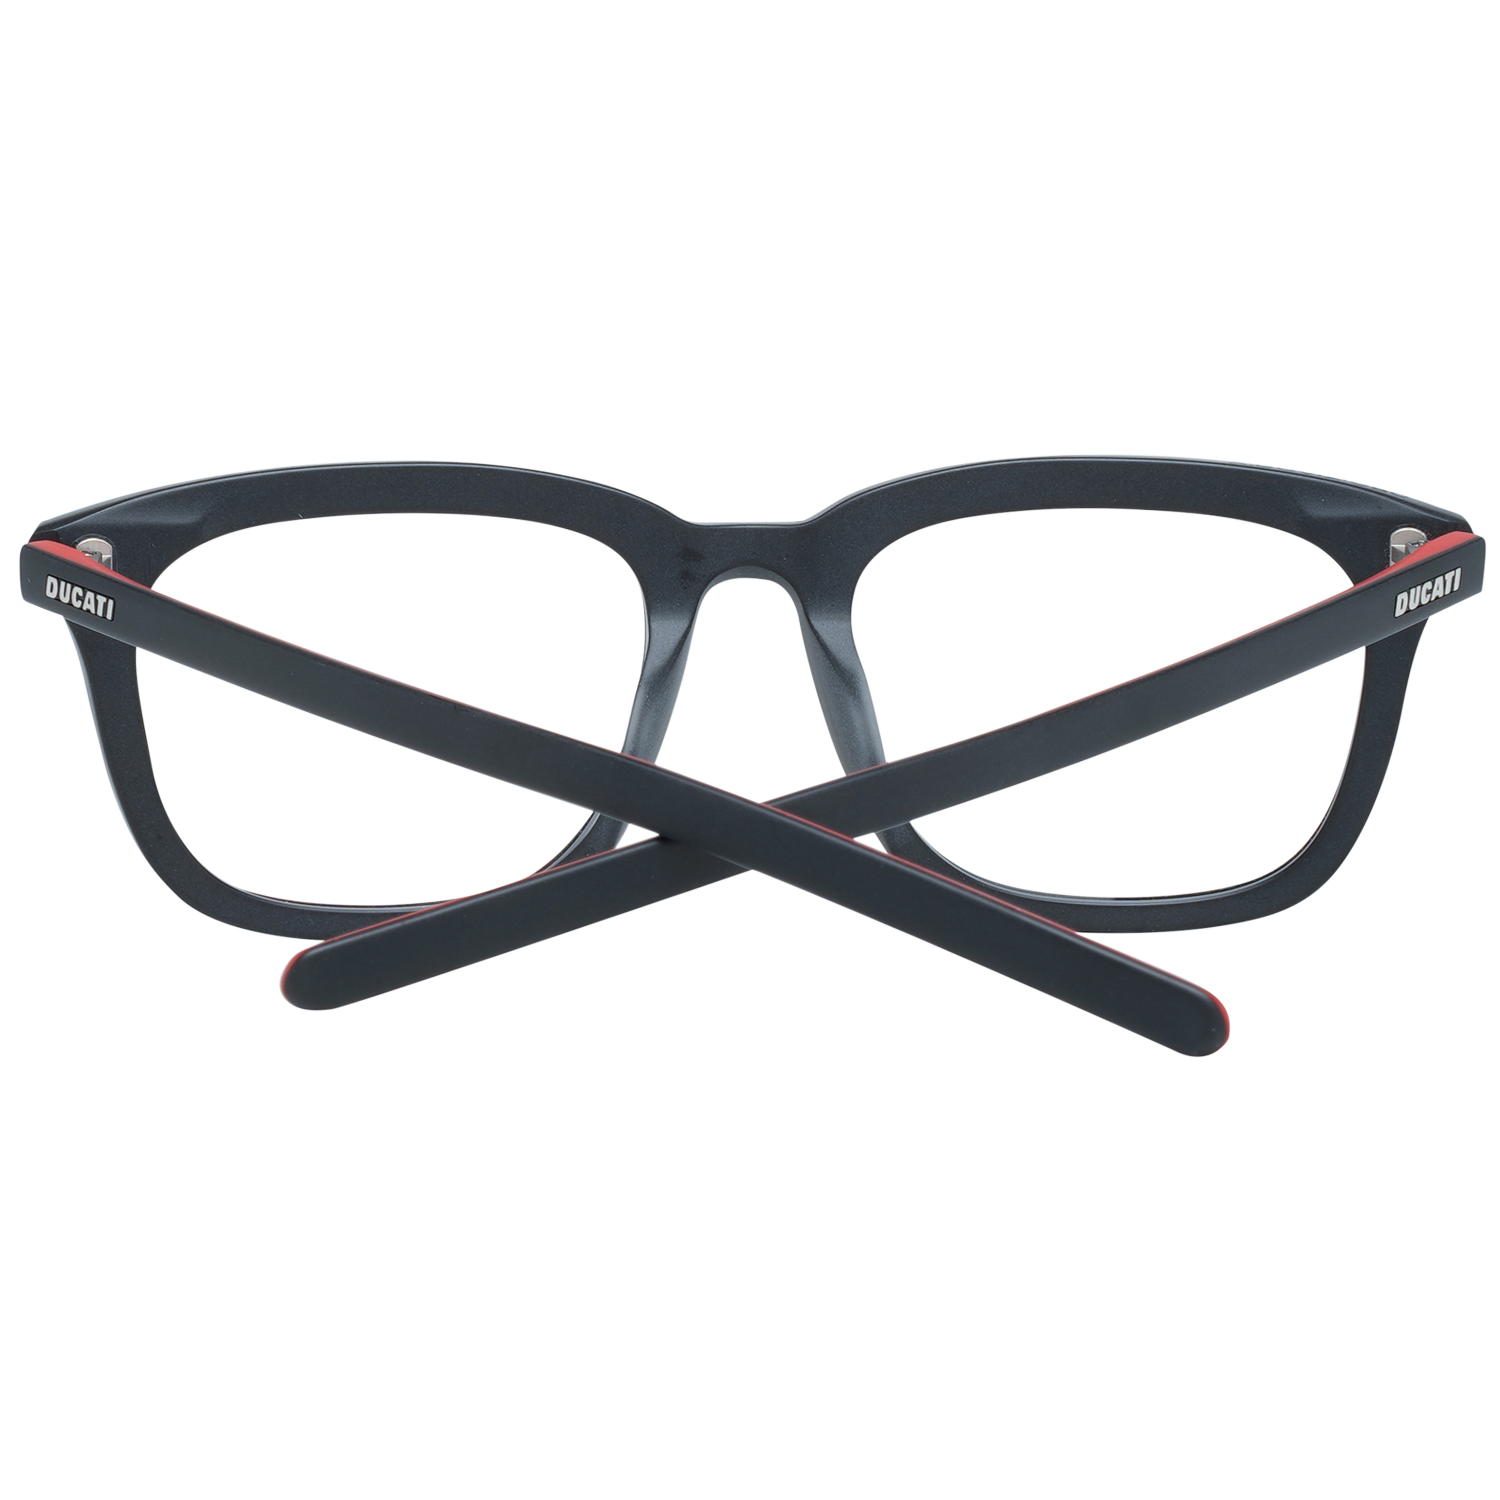 Ducati Frames Ducati Optical Frame DA1030 002 52 Eyeglasses Eyewear UK USA Australia 